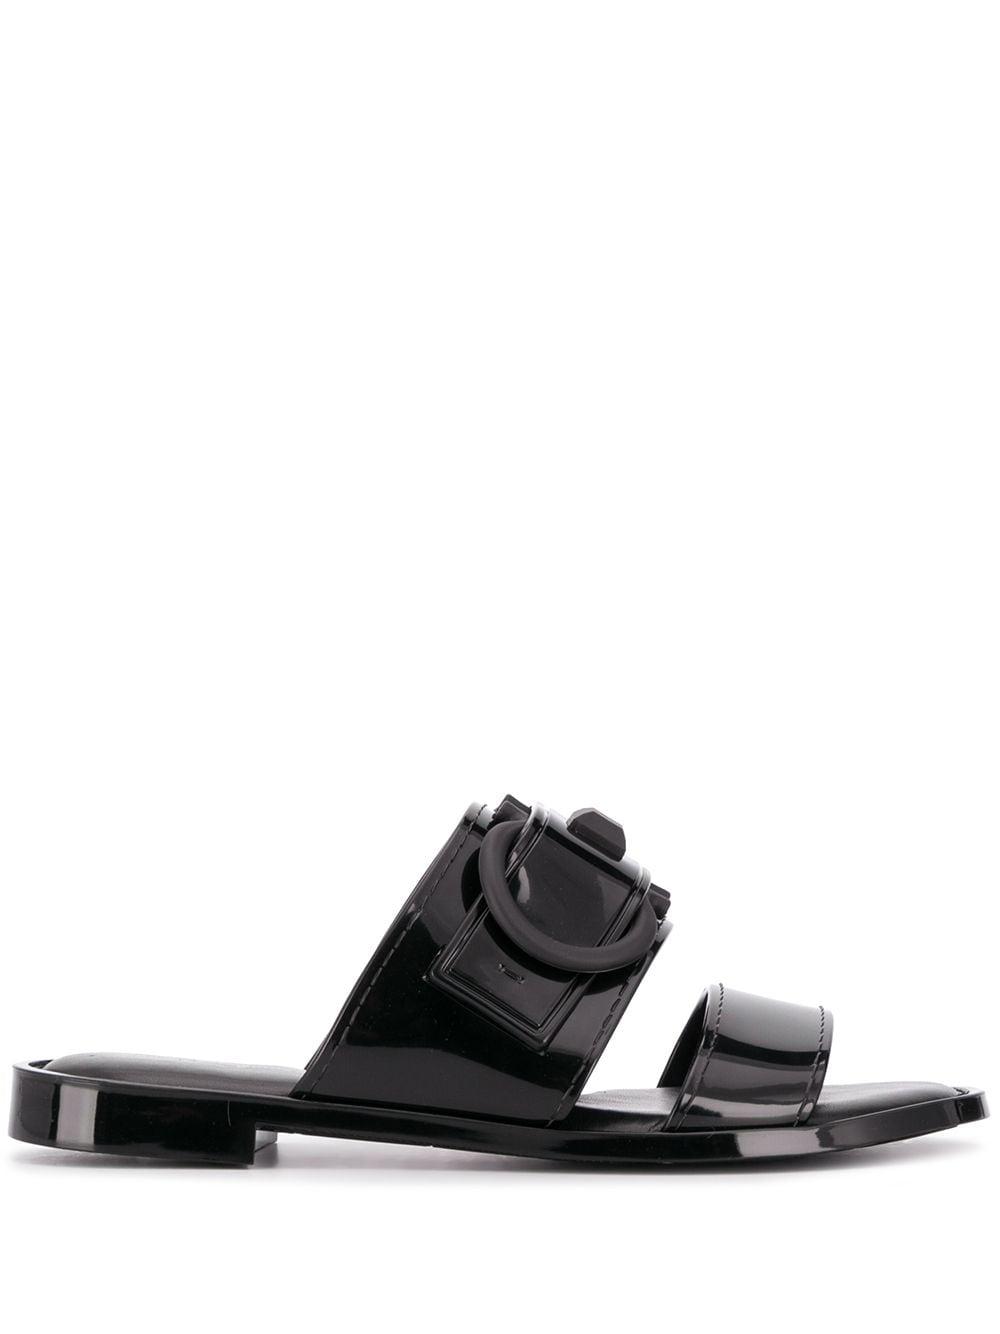 Ferragamo 10mm Taryn Pvc Sandals in Black - Save 10% - Lyst